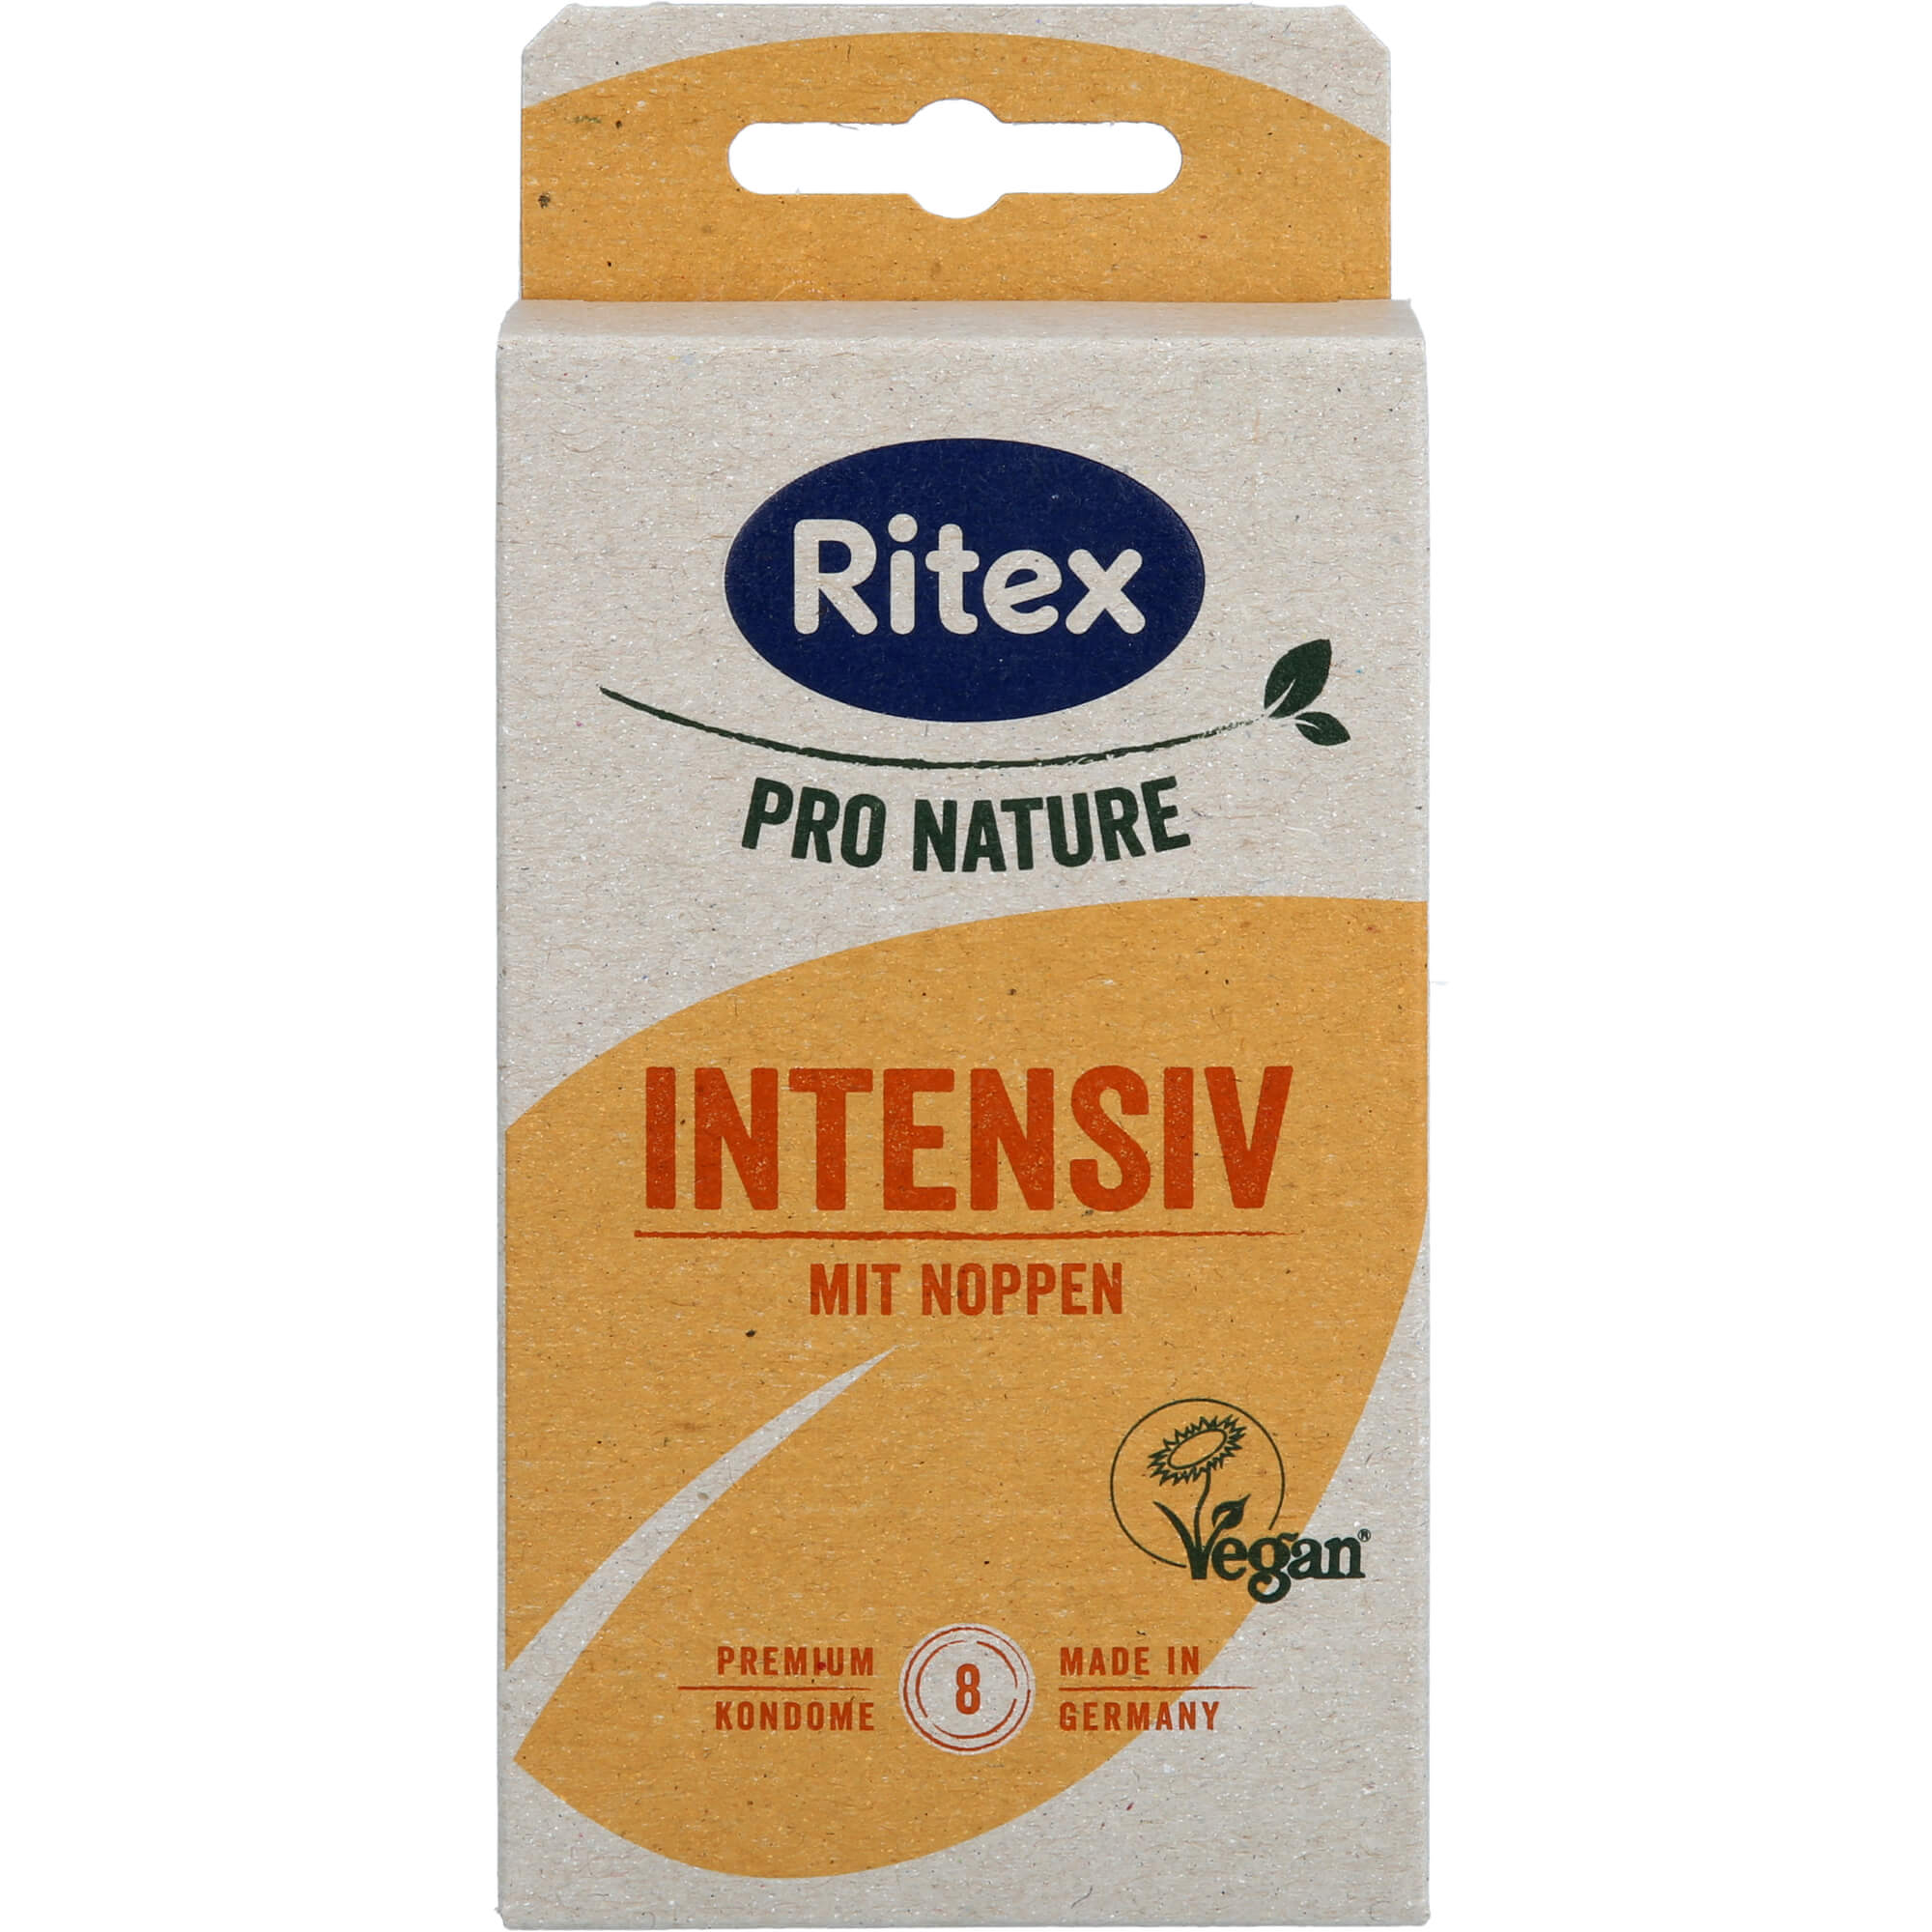 RITEX PRO NATURE INTENSIV vegan Kondome